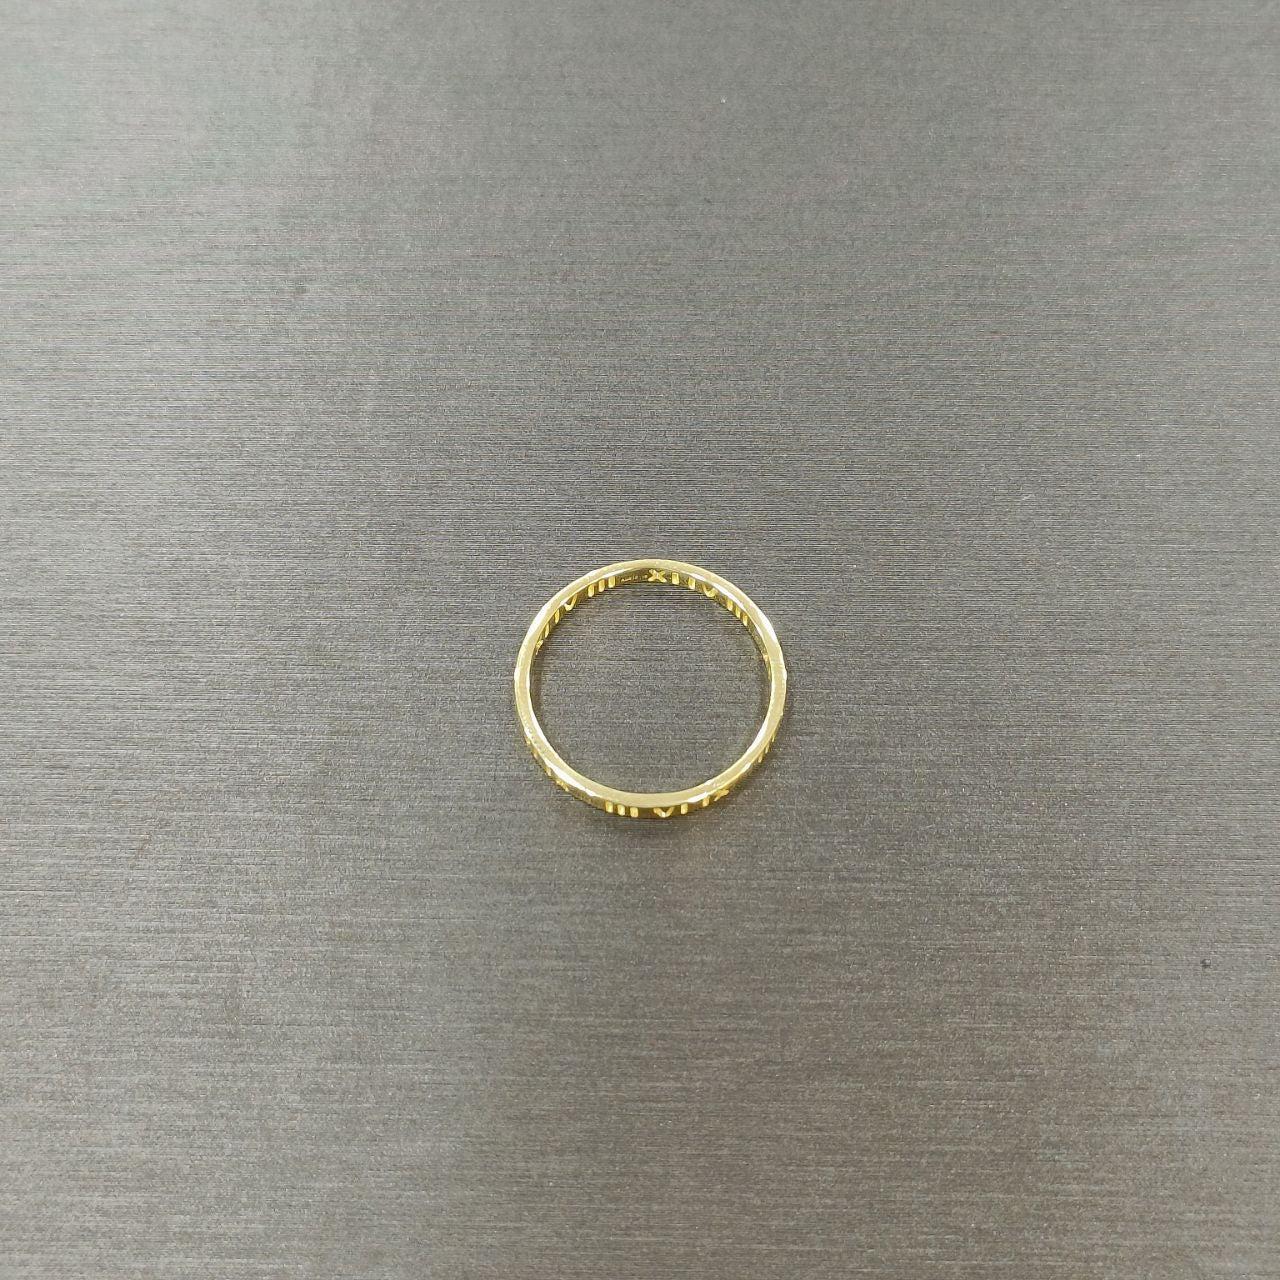 22k / 916 Gold Slim Roman T Design Ring-916 gold-Best Gold Shop